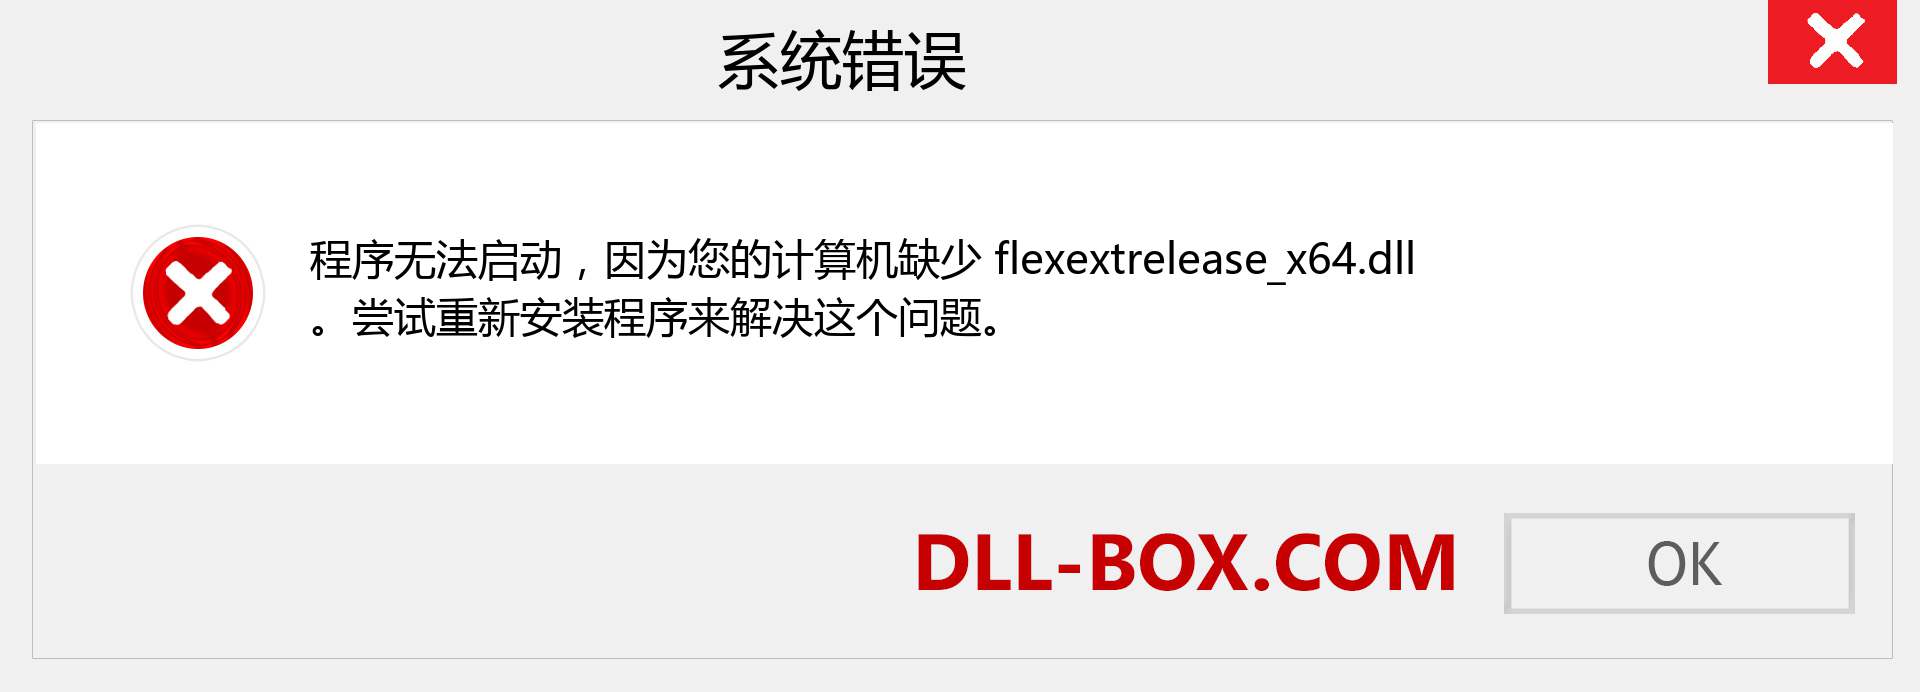 flexextrelease_x64.dll 文件丢失？。 适用于 Windows 7、8、10 的下载 - 修复 Windows、照片、图像上的 flexextrelease_x64 dll 丢失错误